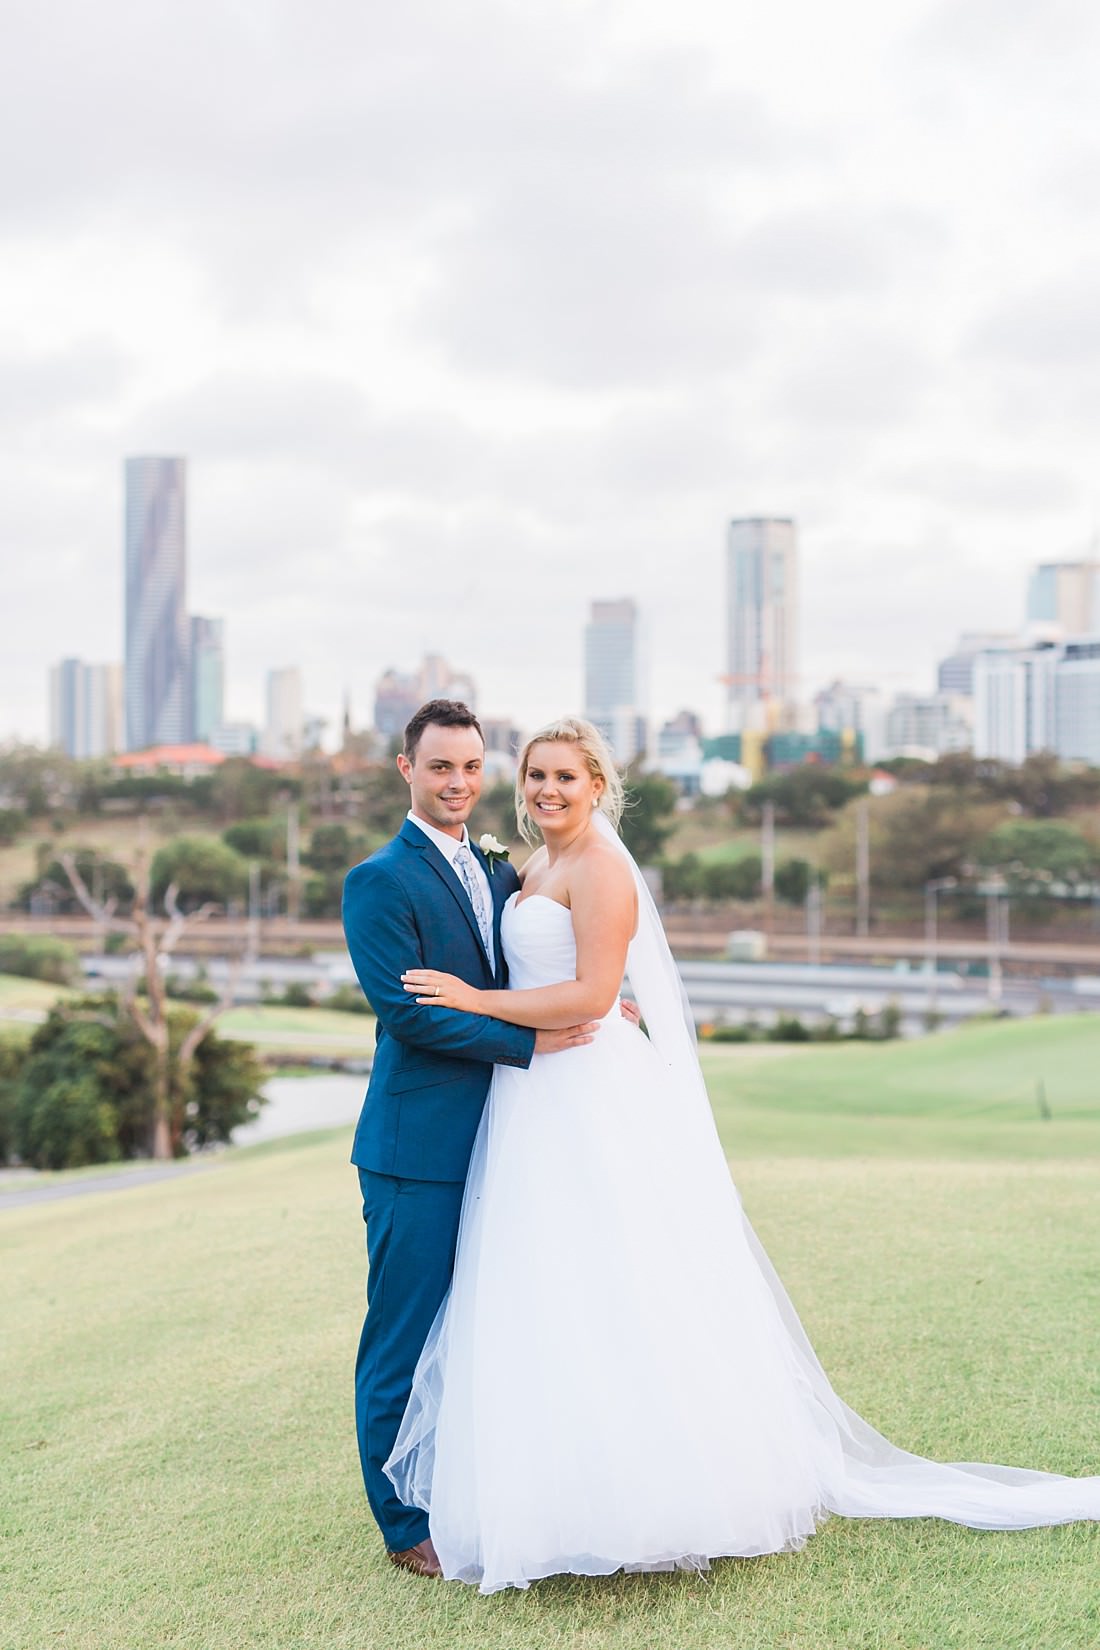 Victoria Park Golf Brisbane Wedding by Mario Colli Photography